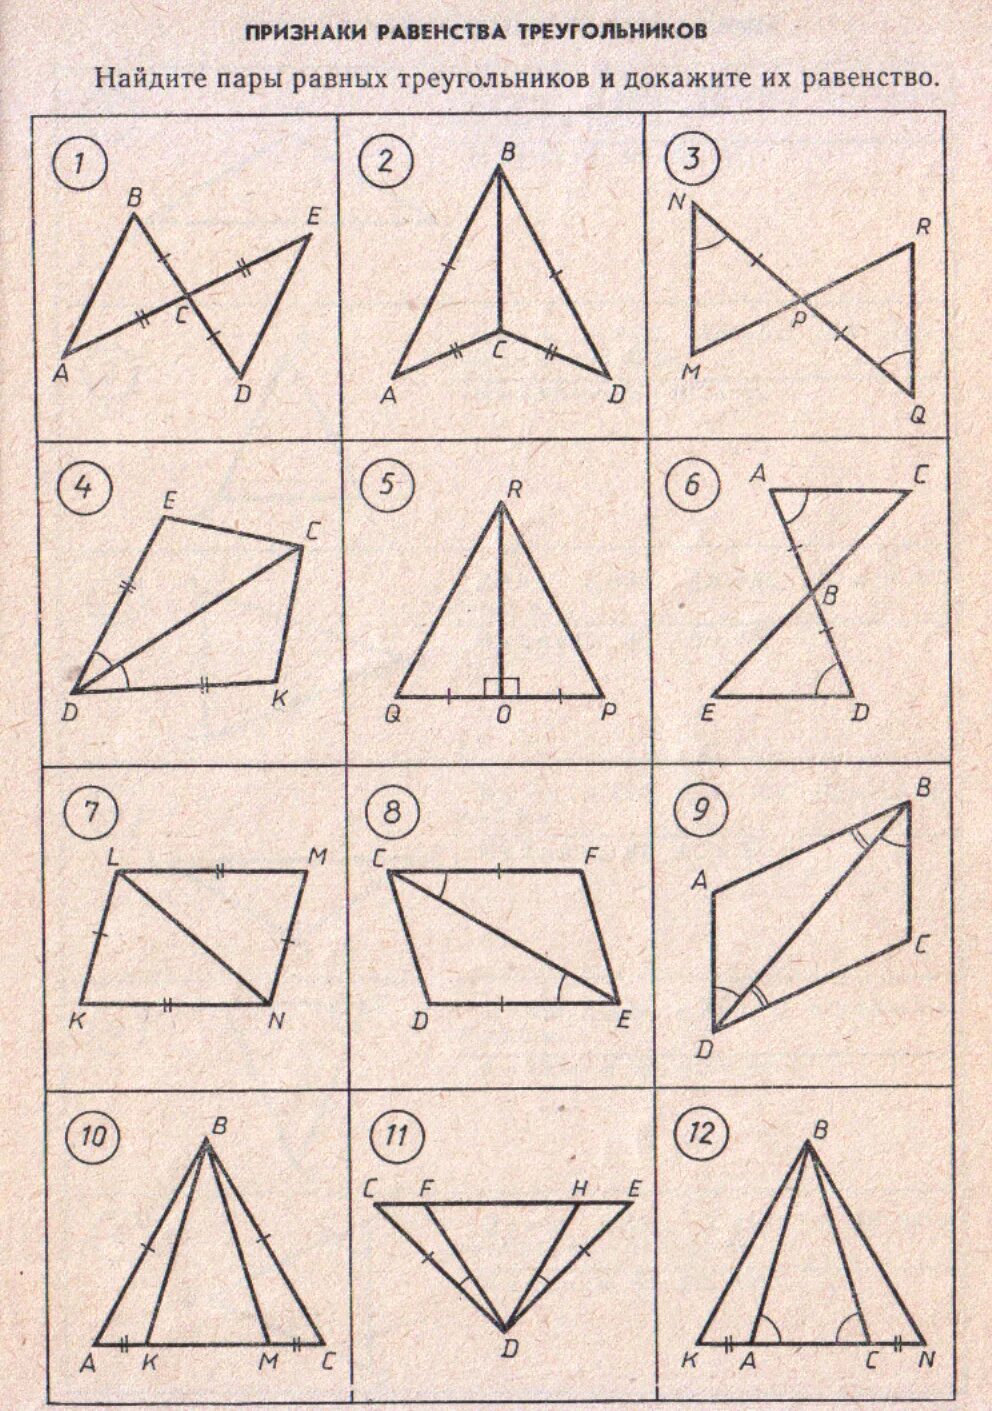 Равенство треугольников карточка. Признаки равенства треугольников 7 класс геометрия задачи. Задачи в чертежах на признаки равенства треугольников. Задачи на равенство треугольников по готовым чертежам. Задачи на равенство треугольников 7 класс на готовых чертежах.